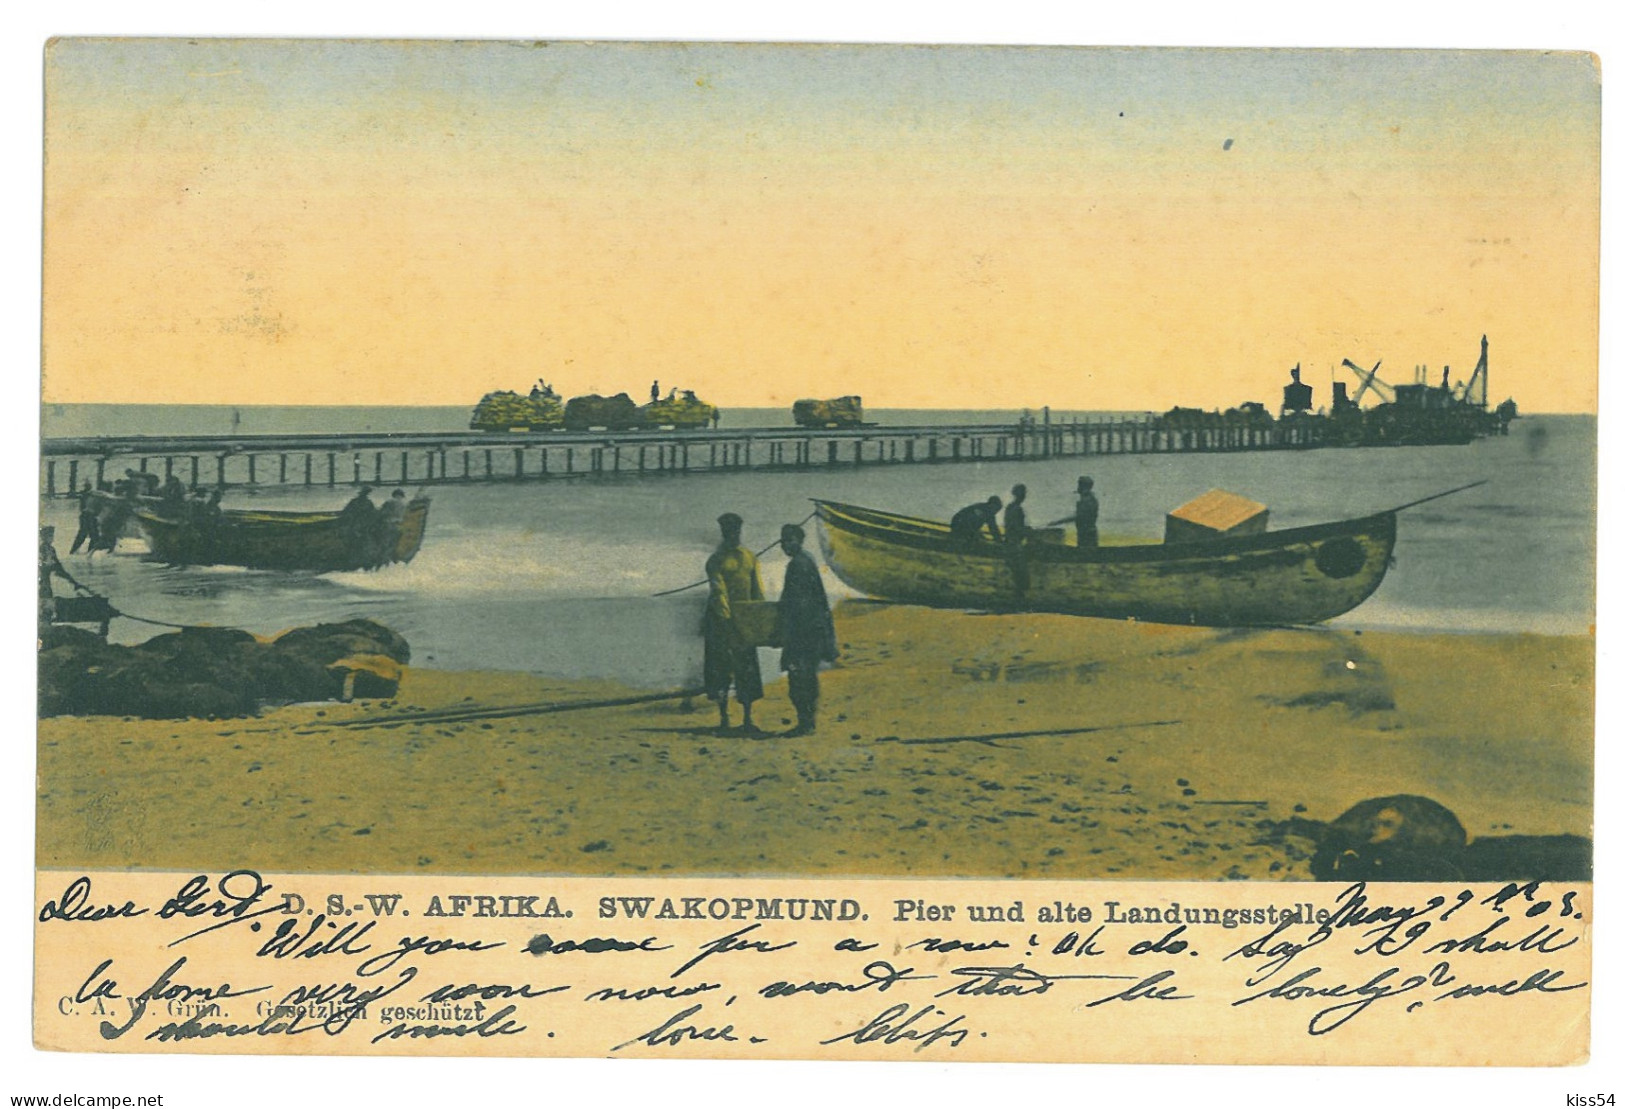 NAM 8 - 23800 SWAKOPMUND, Wharf, D.S.W. Afrika, Namibia - Old Postcard - Used - 1903 - Namibia